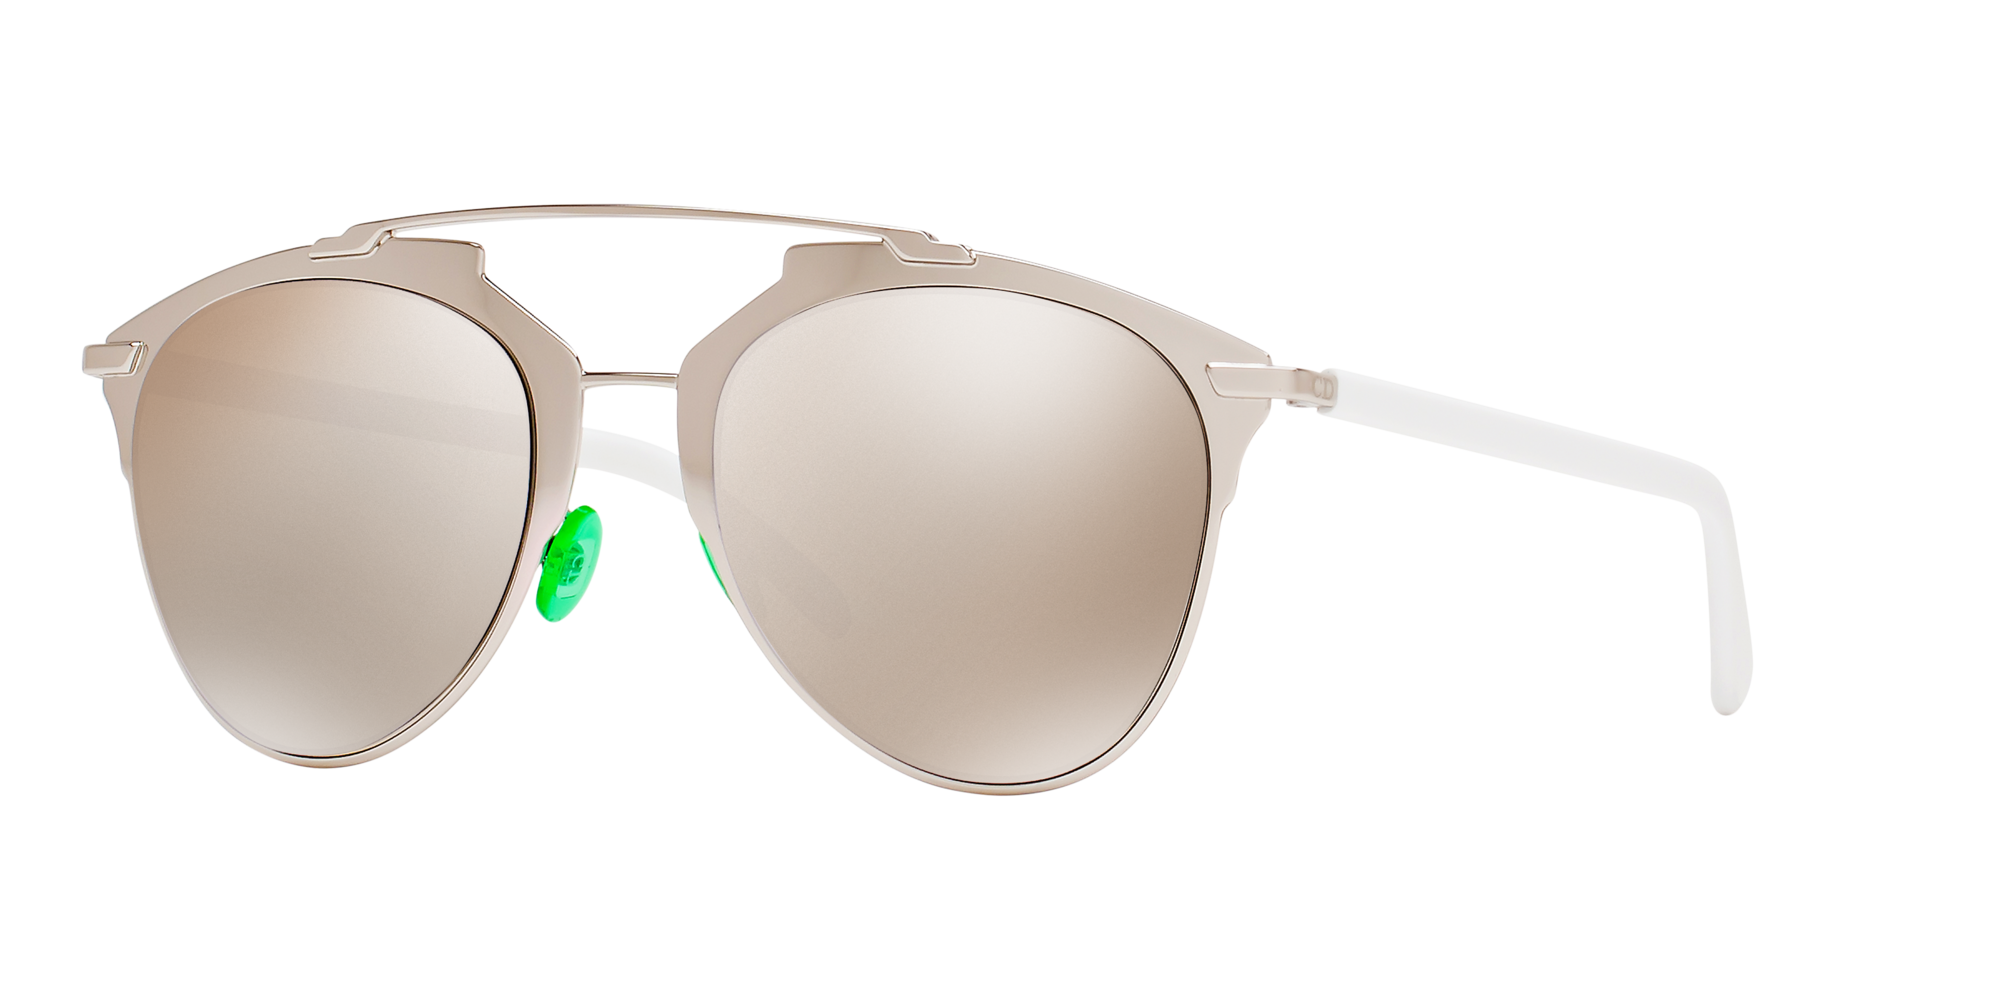 buy dior sunglasses online